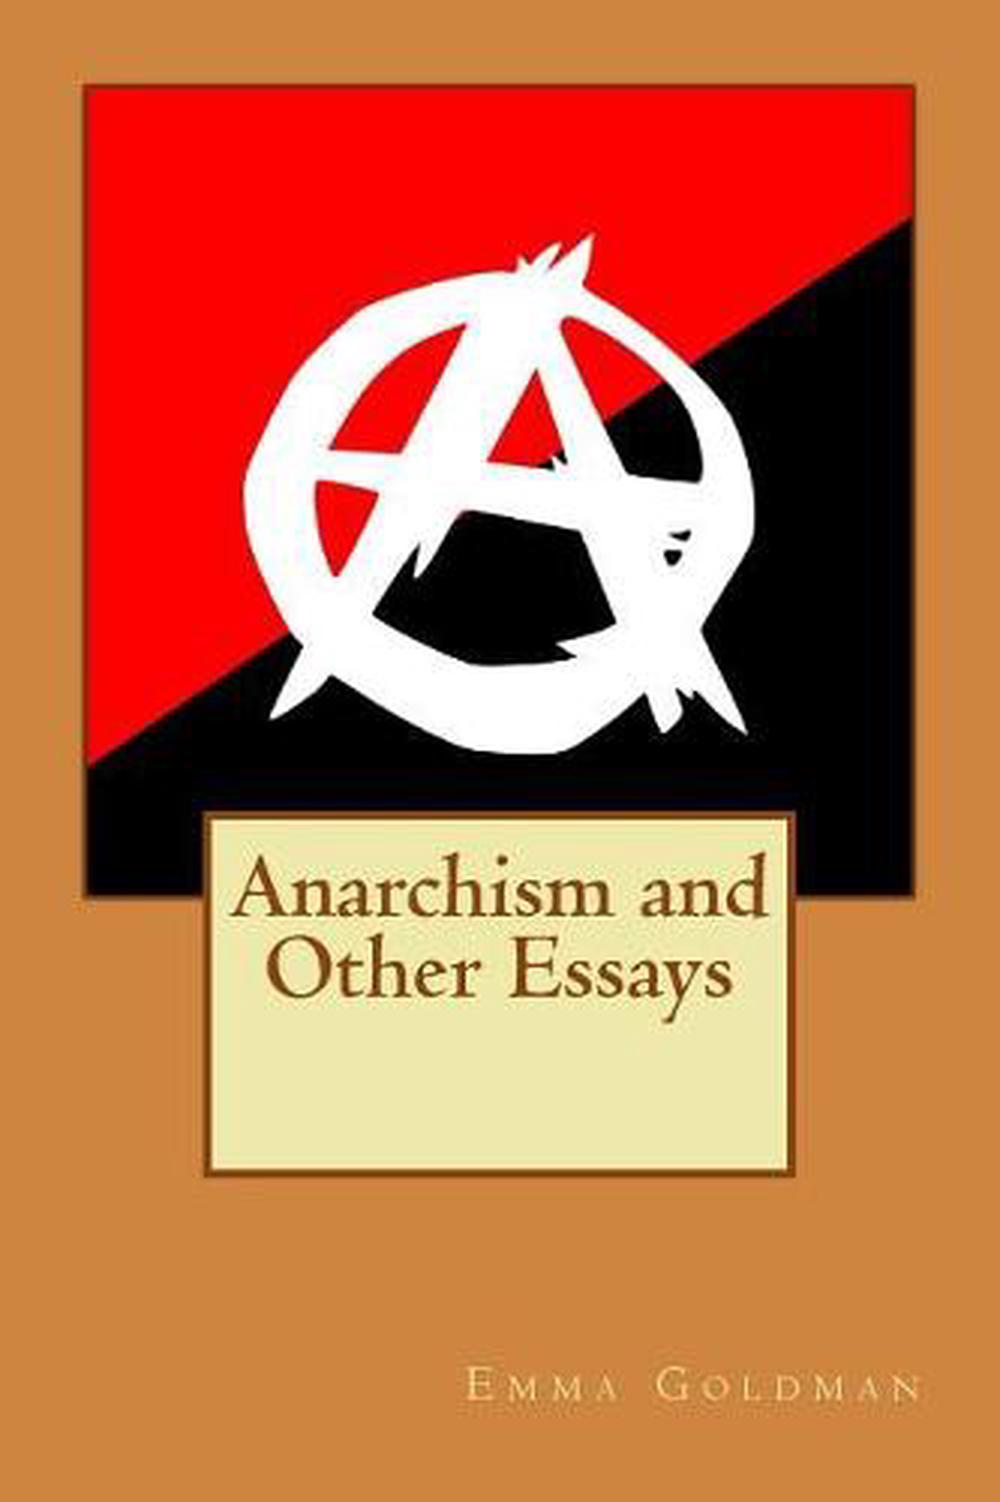 emma goldman anarchism and other essays pdf